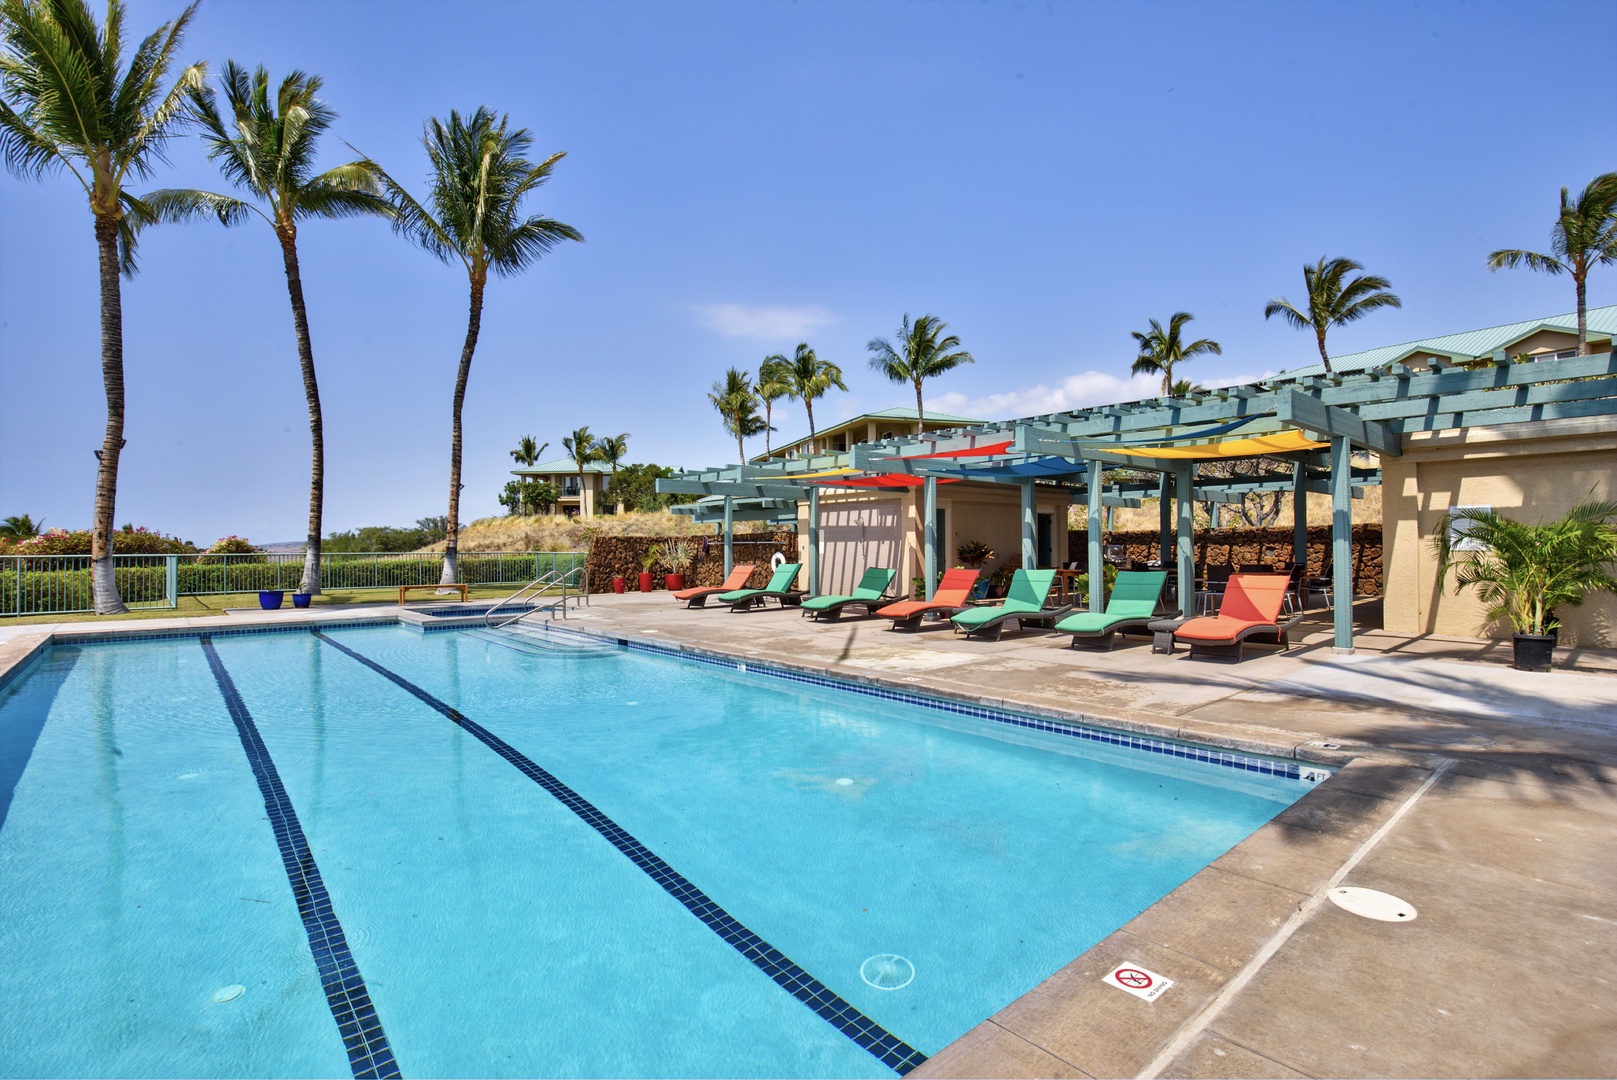 Enjoy swimming laps or taking a dip in this refreshing community pool.